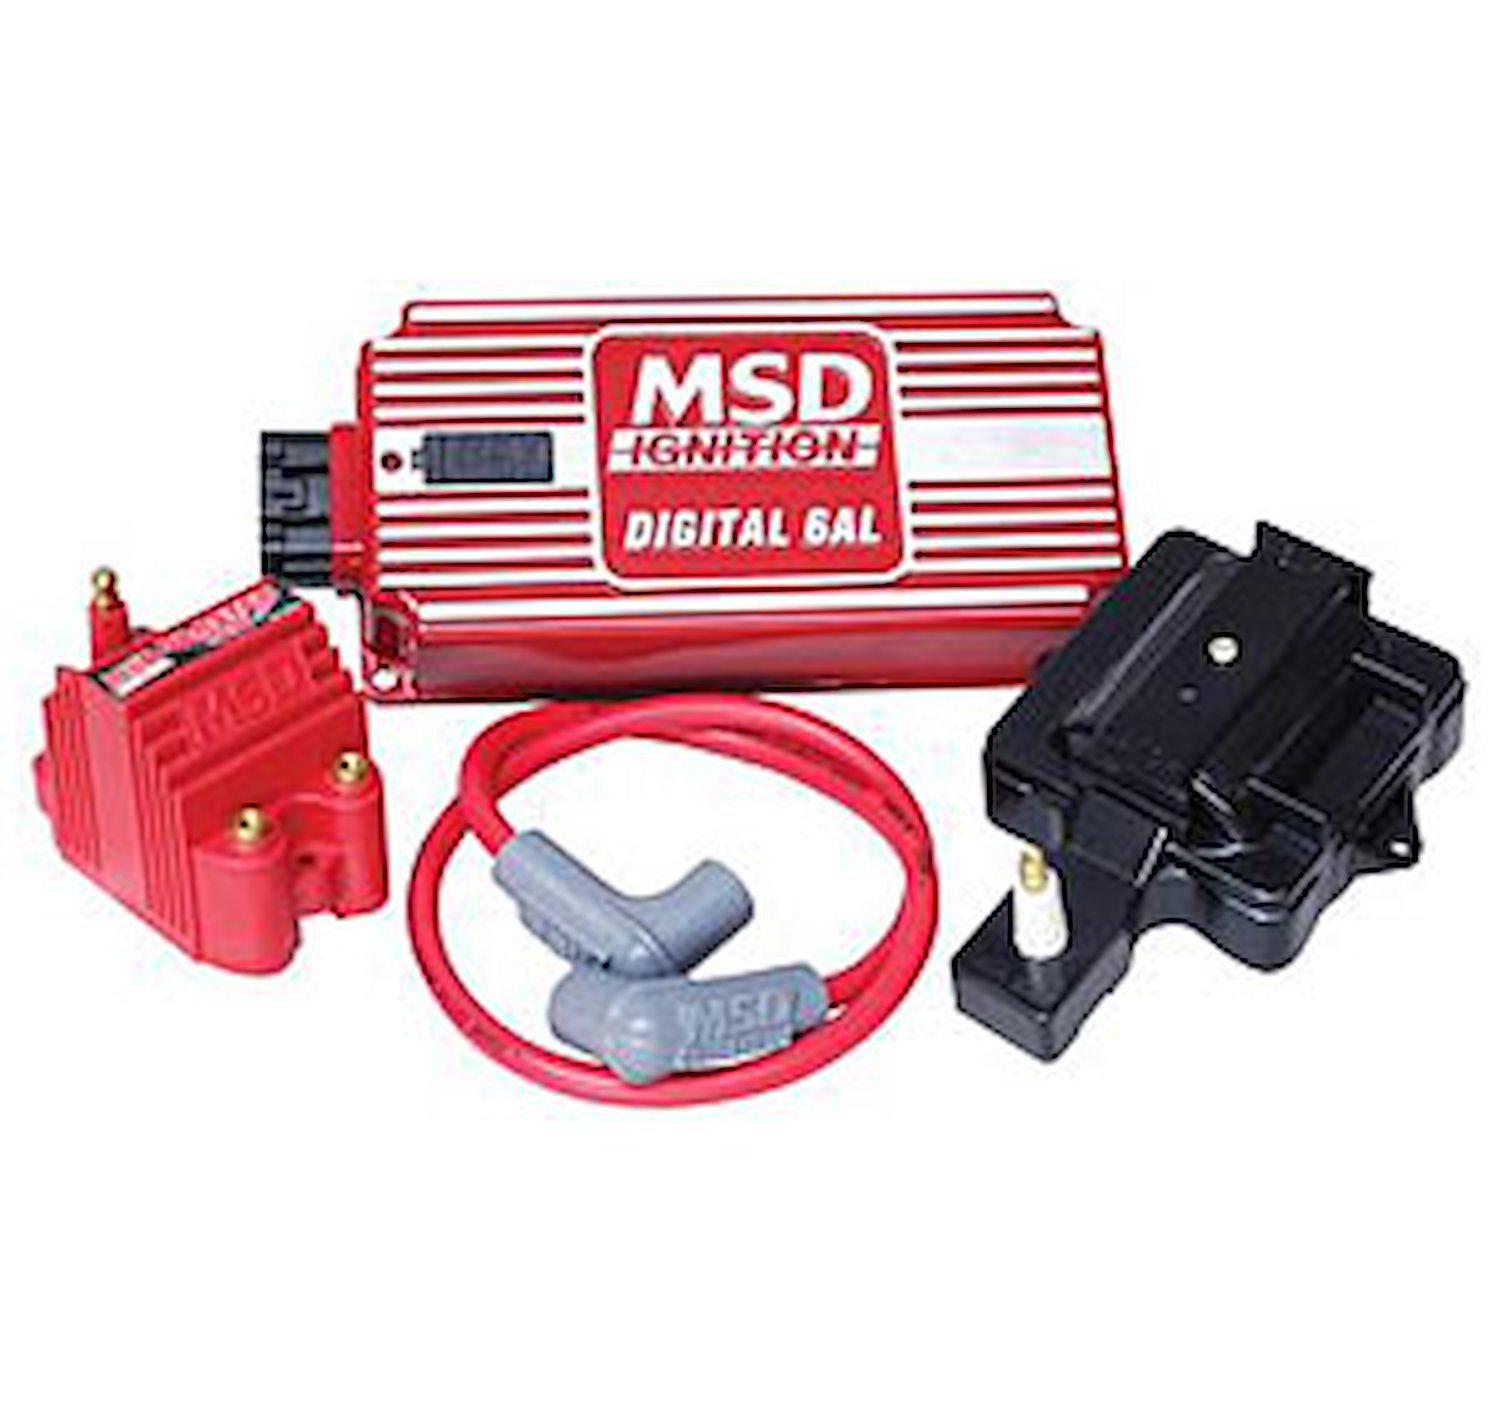 85001 Super HEI Ignition Kit Includes: MSD Digital 6AL Ignition